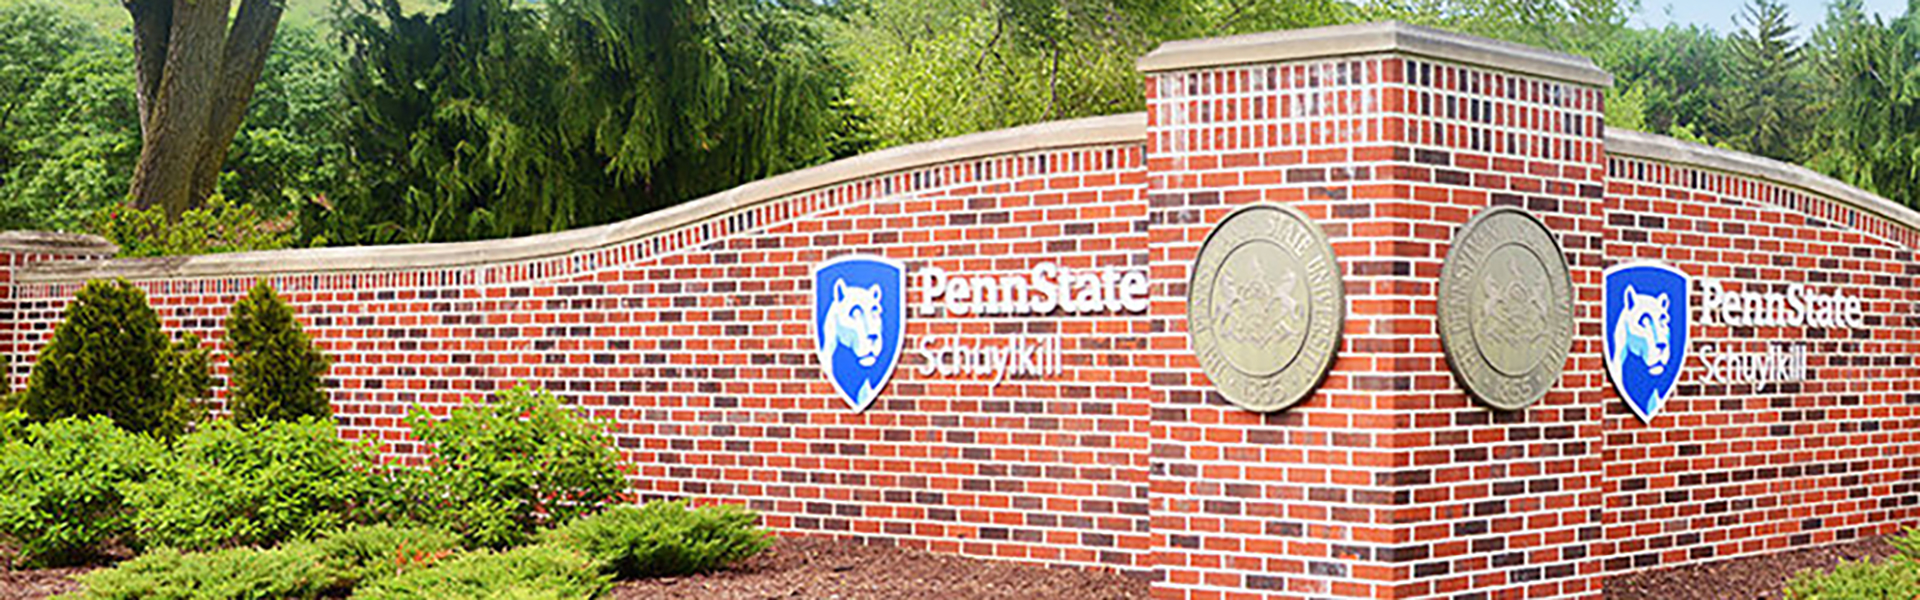 Schuylkill campus entrance gate